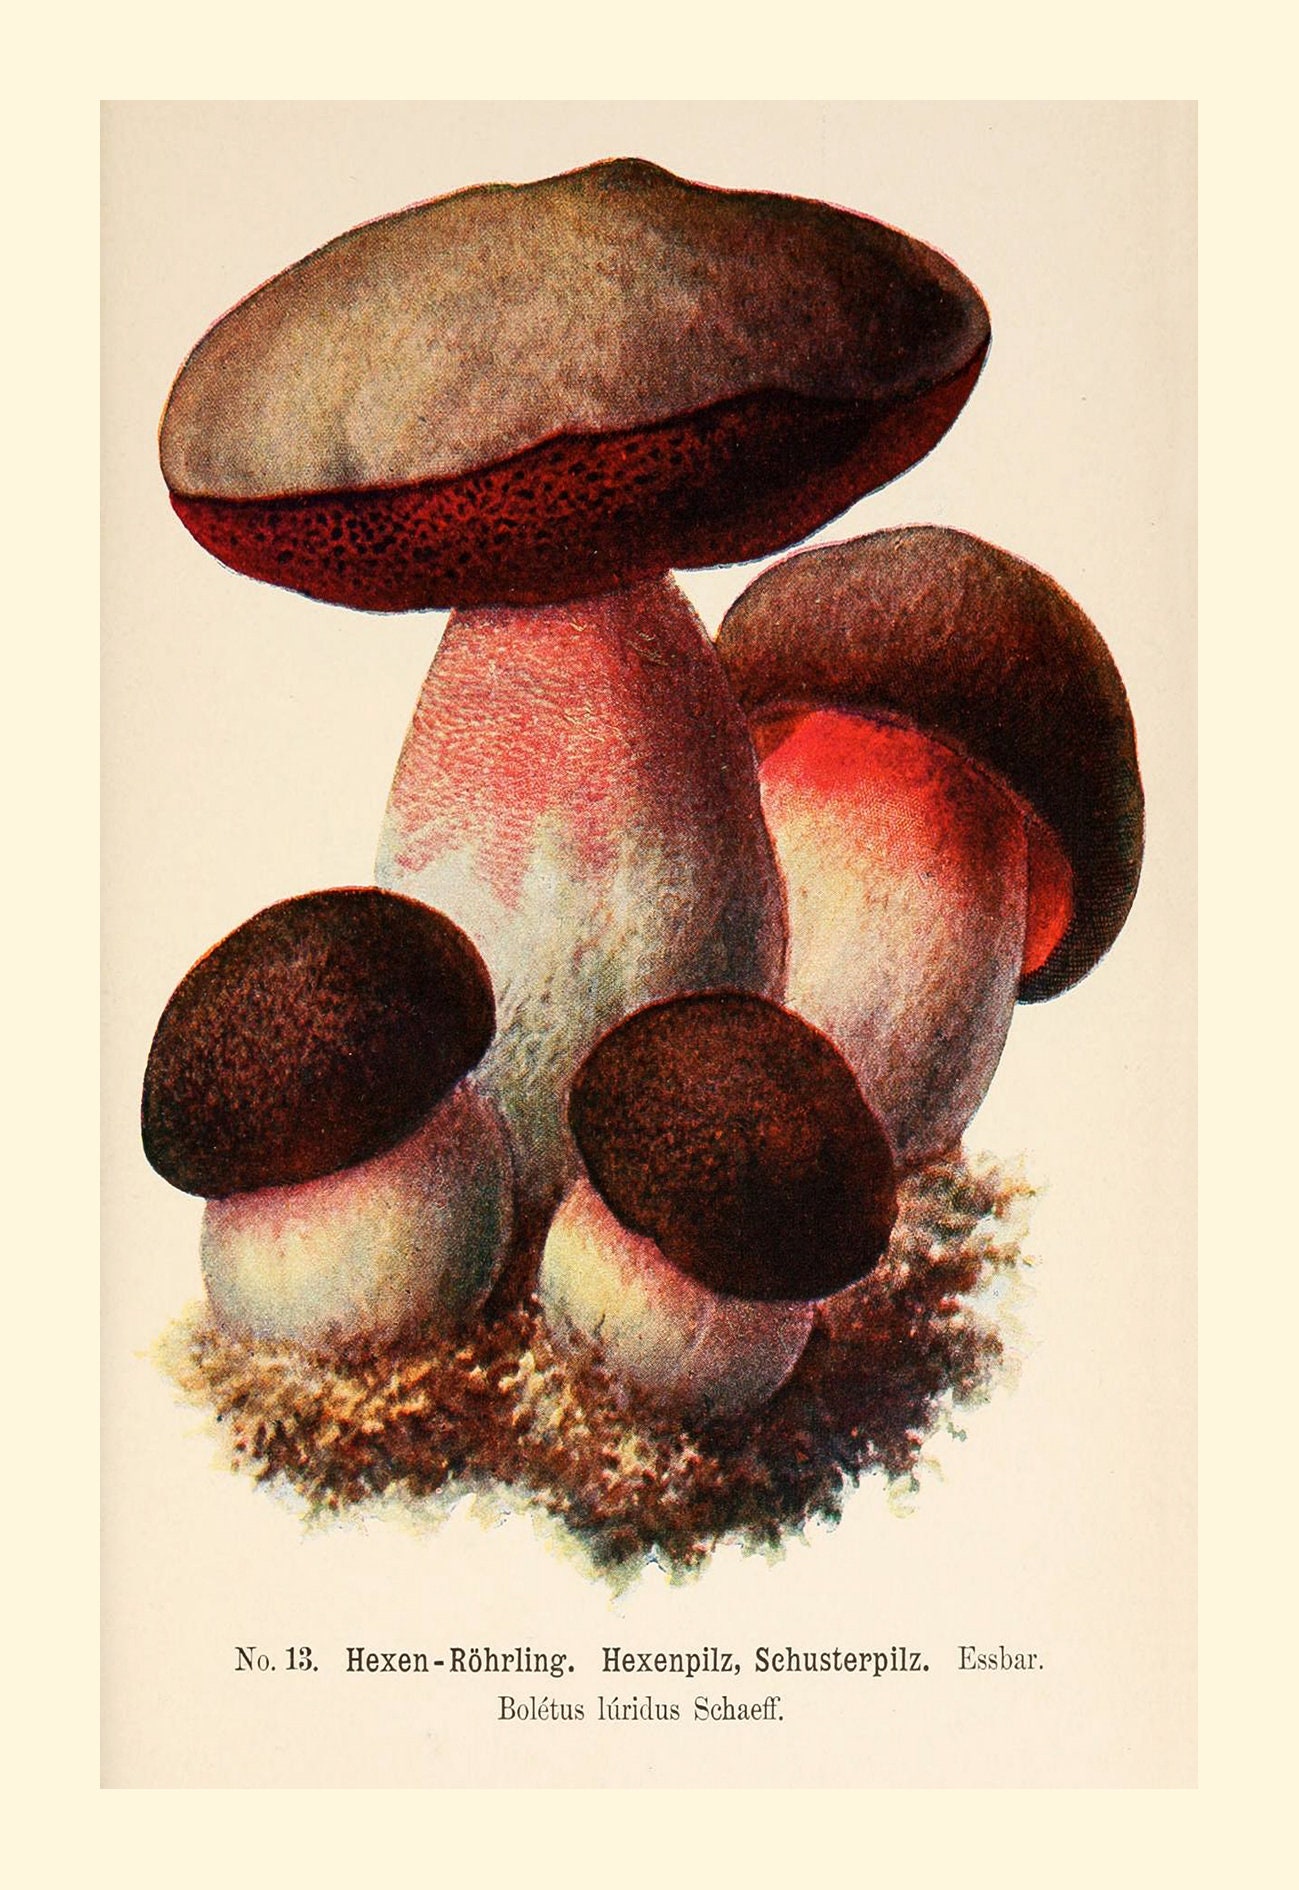 Mushroom Jar, Vintage Psychedelic Rainbow Illustration Postcard for Sale  by chrystakay